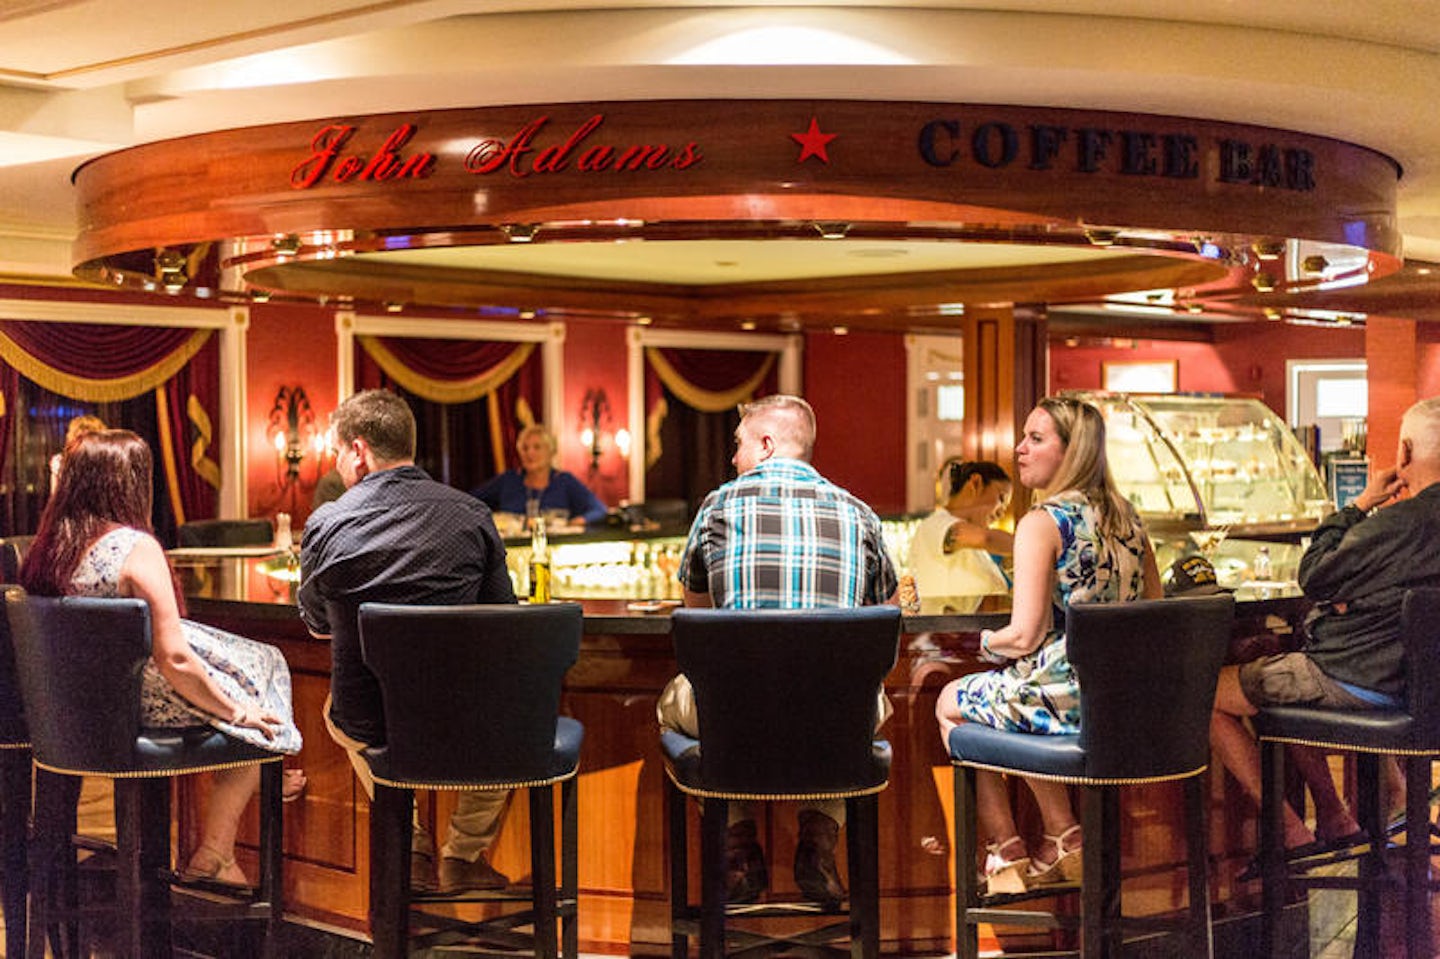 John Adams Coffee Bar on Pride of America